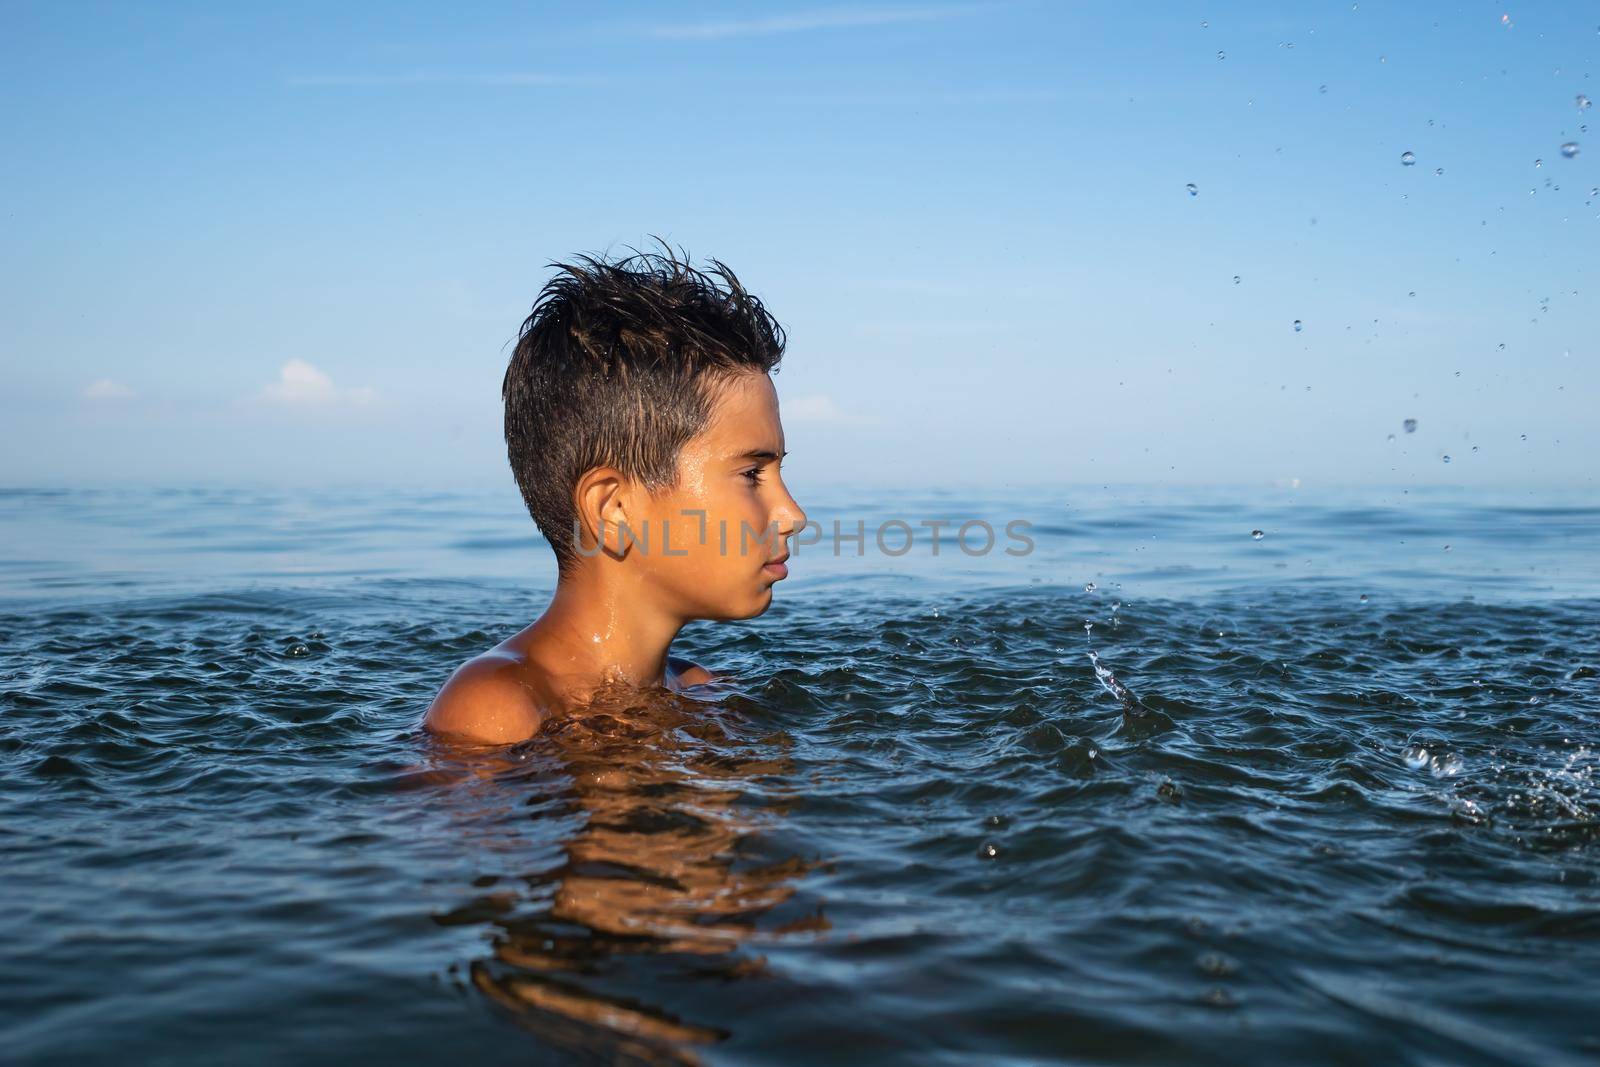  boy bathes in the sea by palinchak